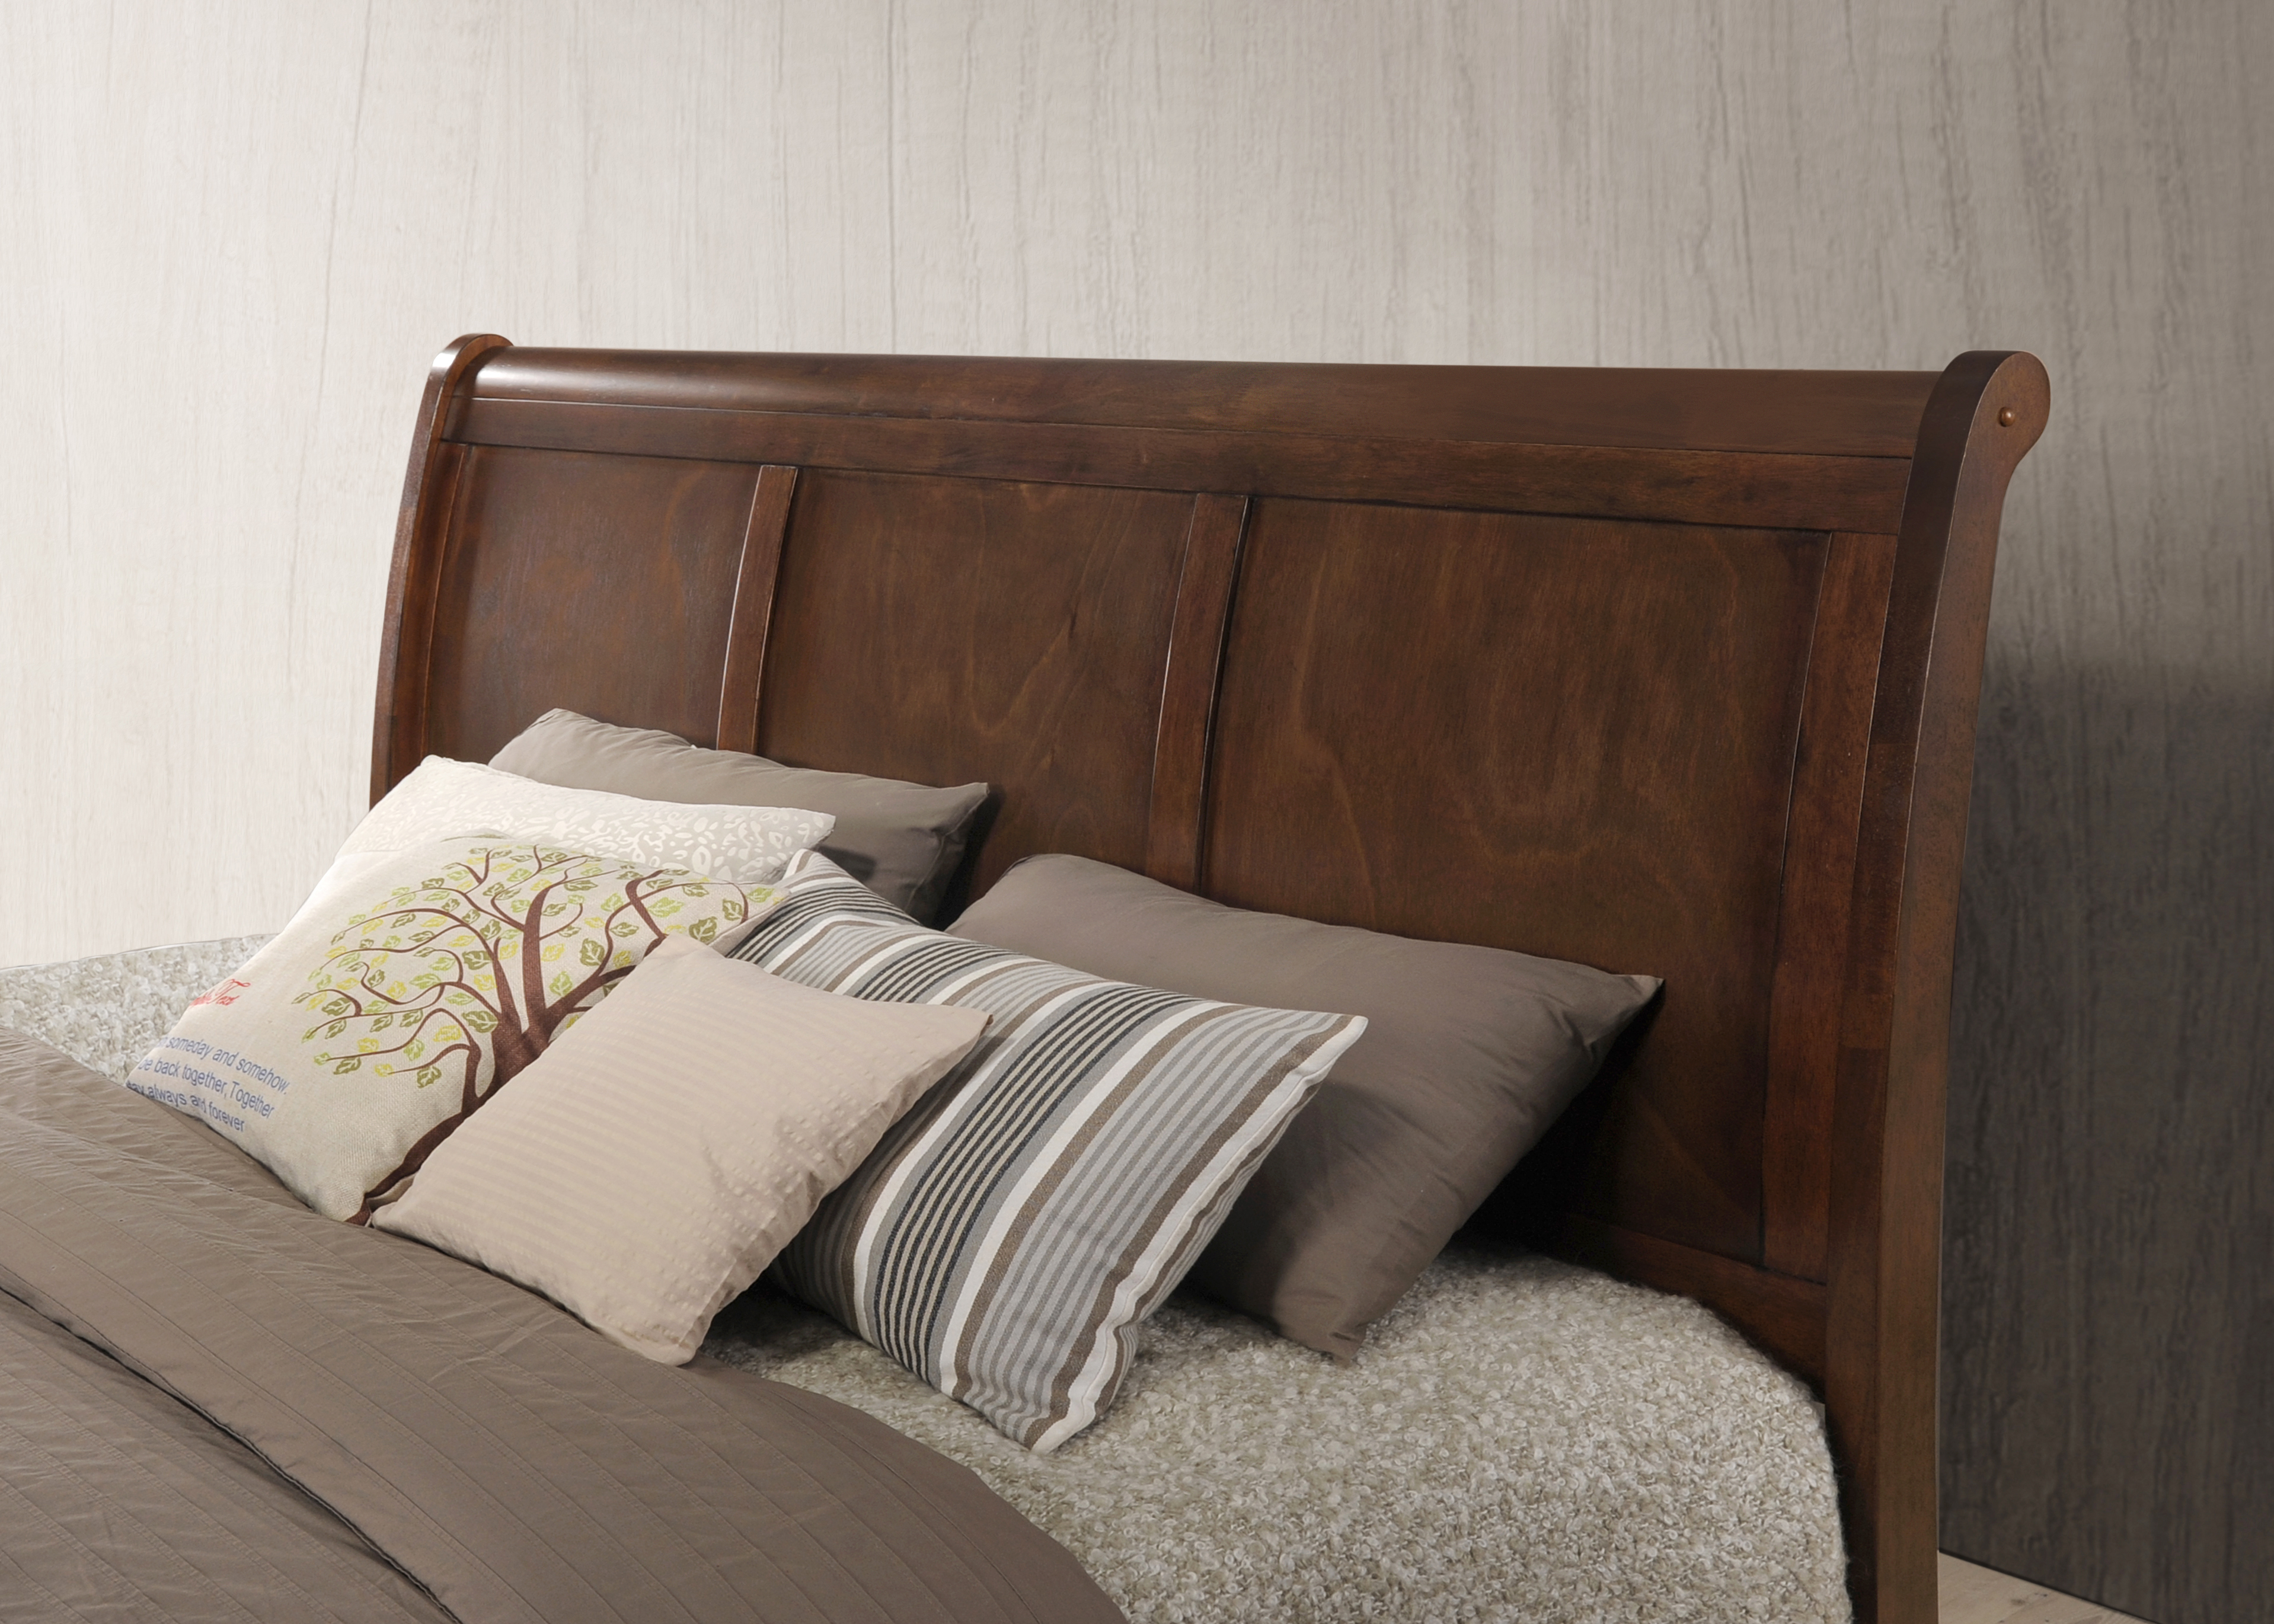 Furnituremaxx Concord Cherry Finish wood Bedroom Set  King Platform Bed  Dresser  Mirror  Night Stand  Chest